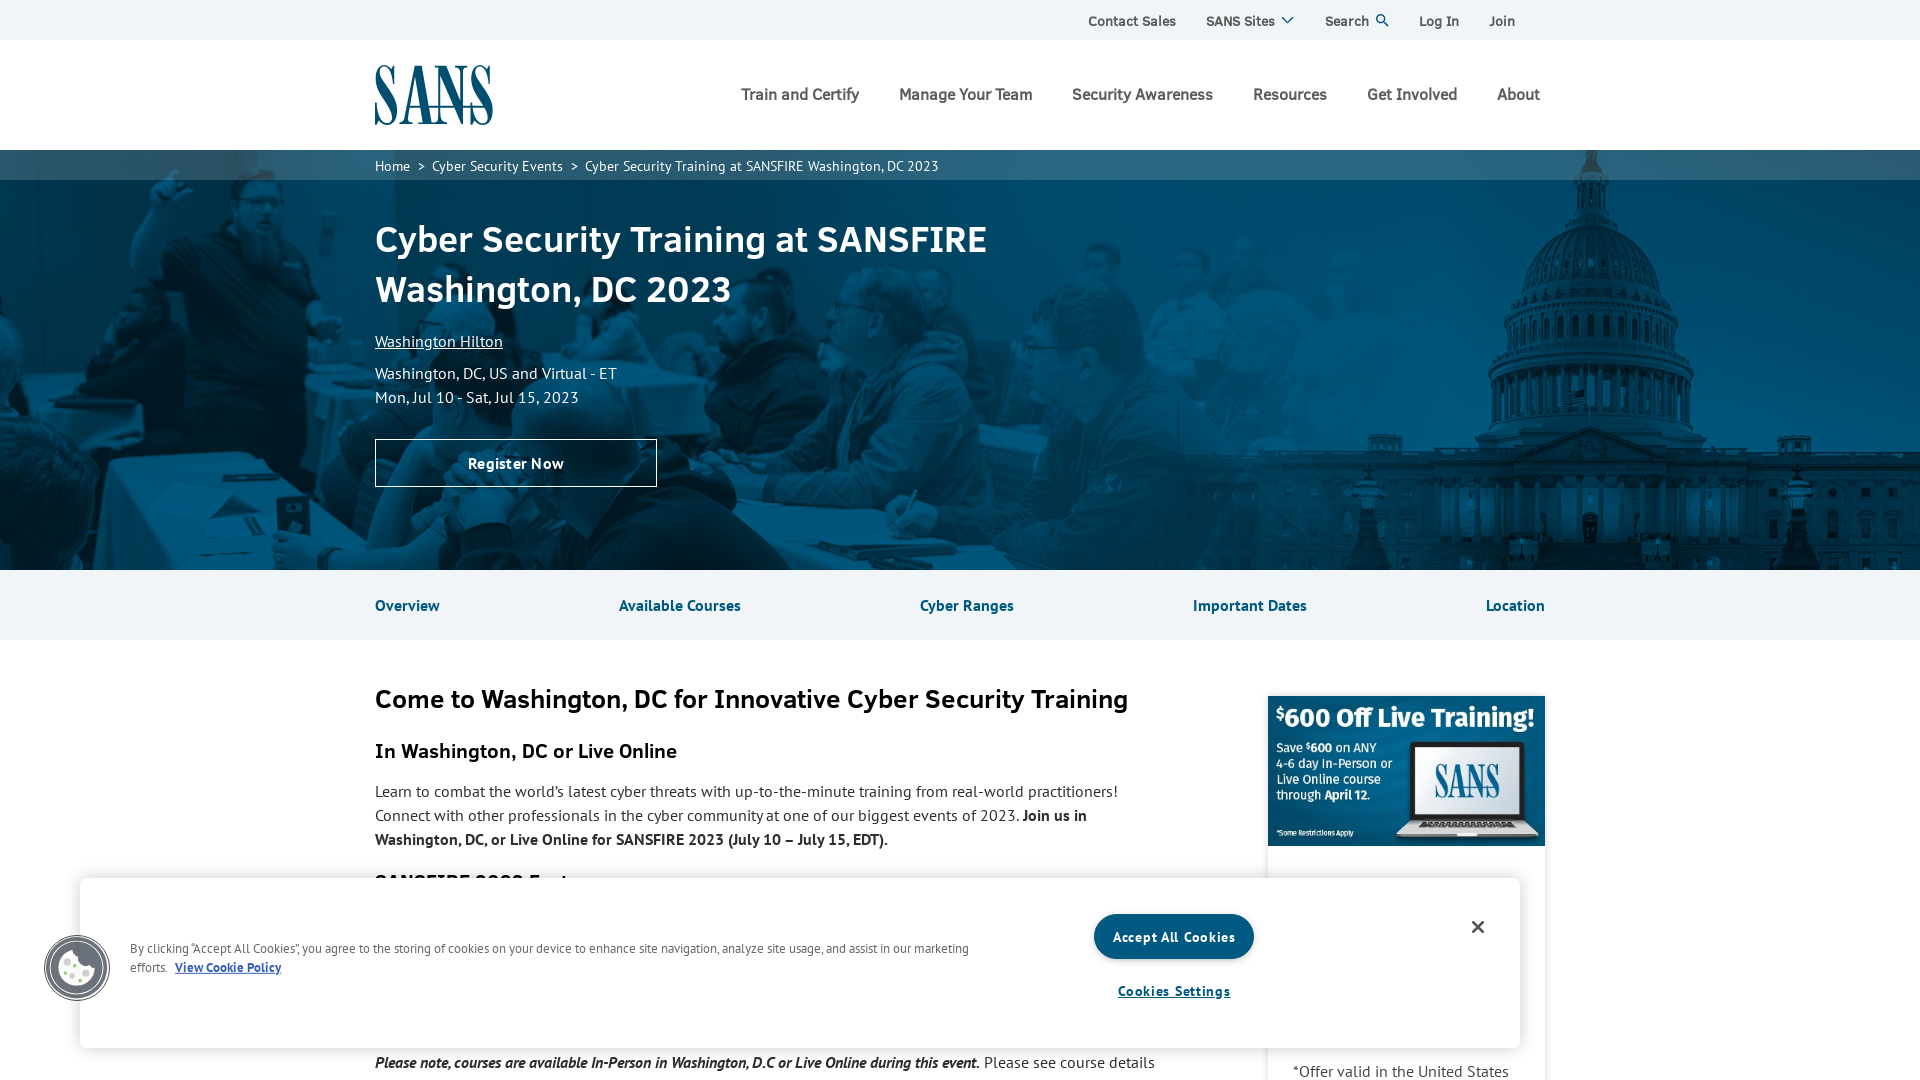 SANSFIRE Washington, DC 2023 | Cyber Security Training